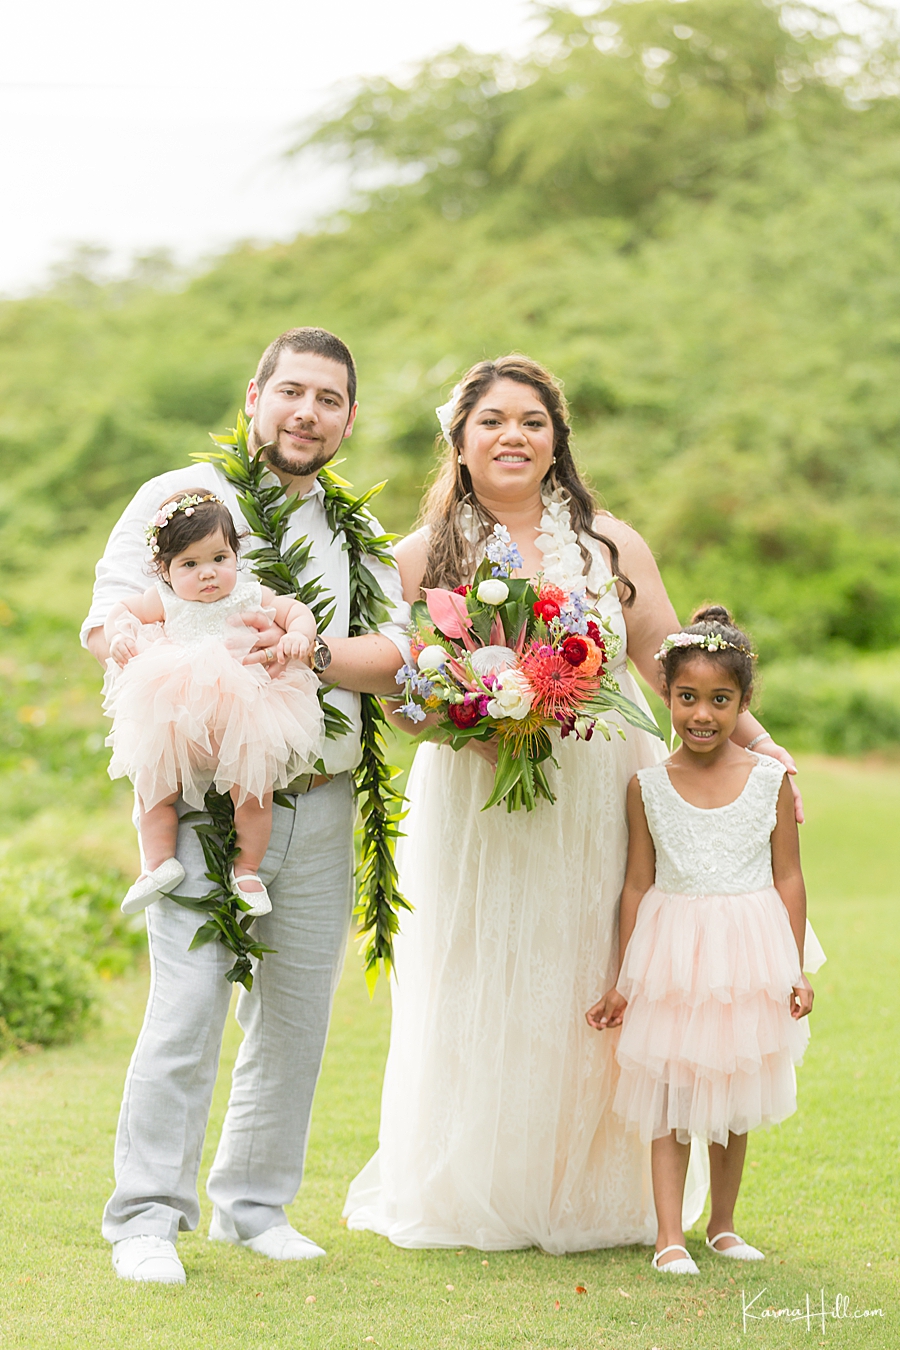 Hawaii marriage license Information
